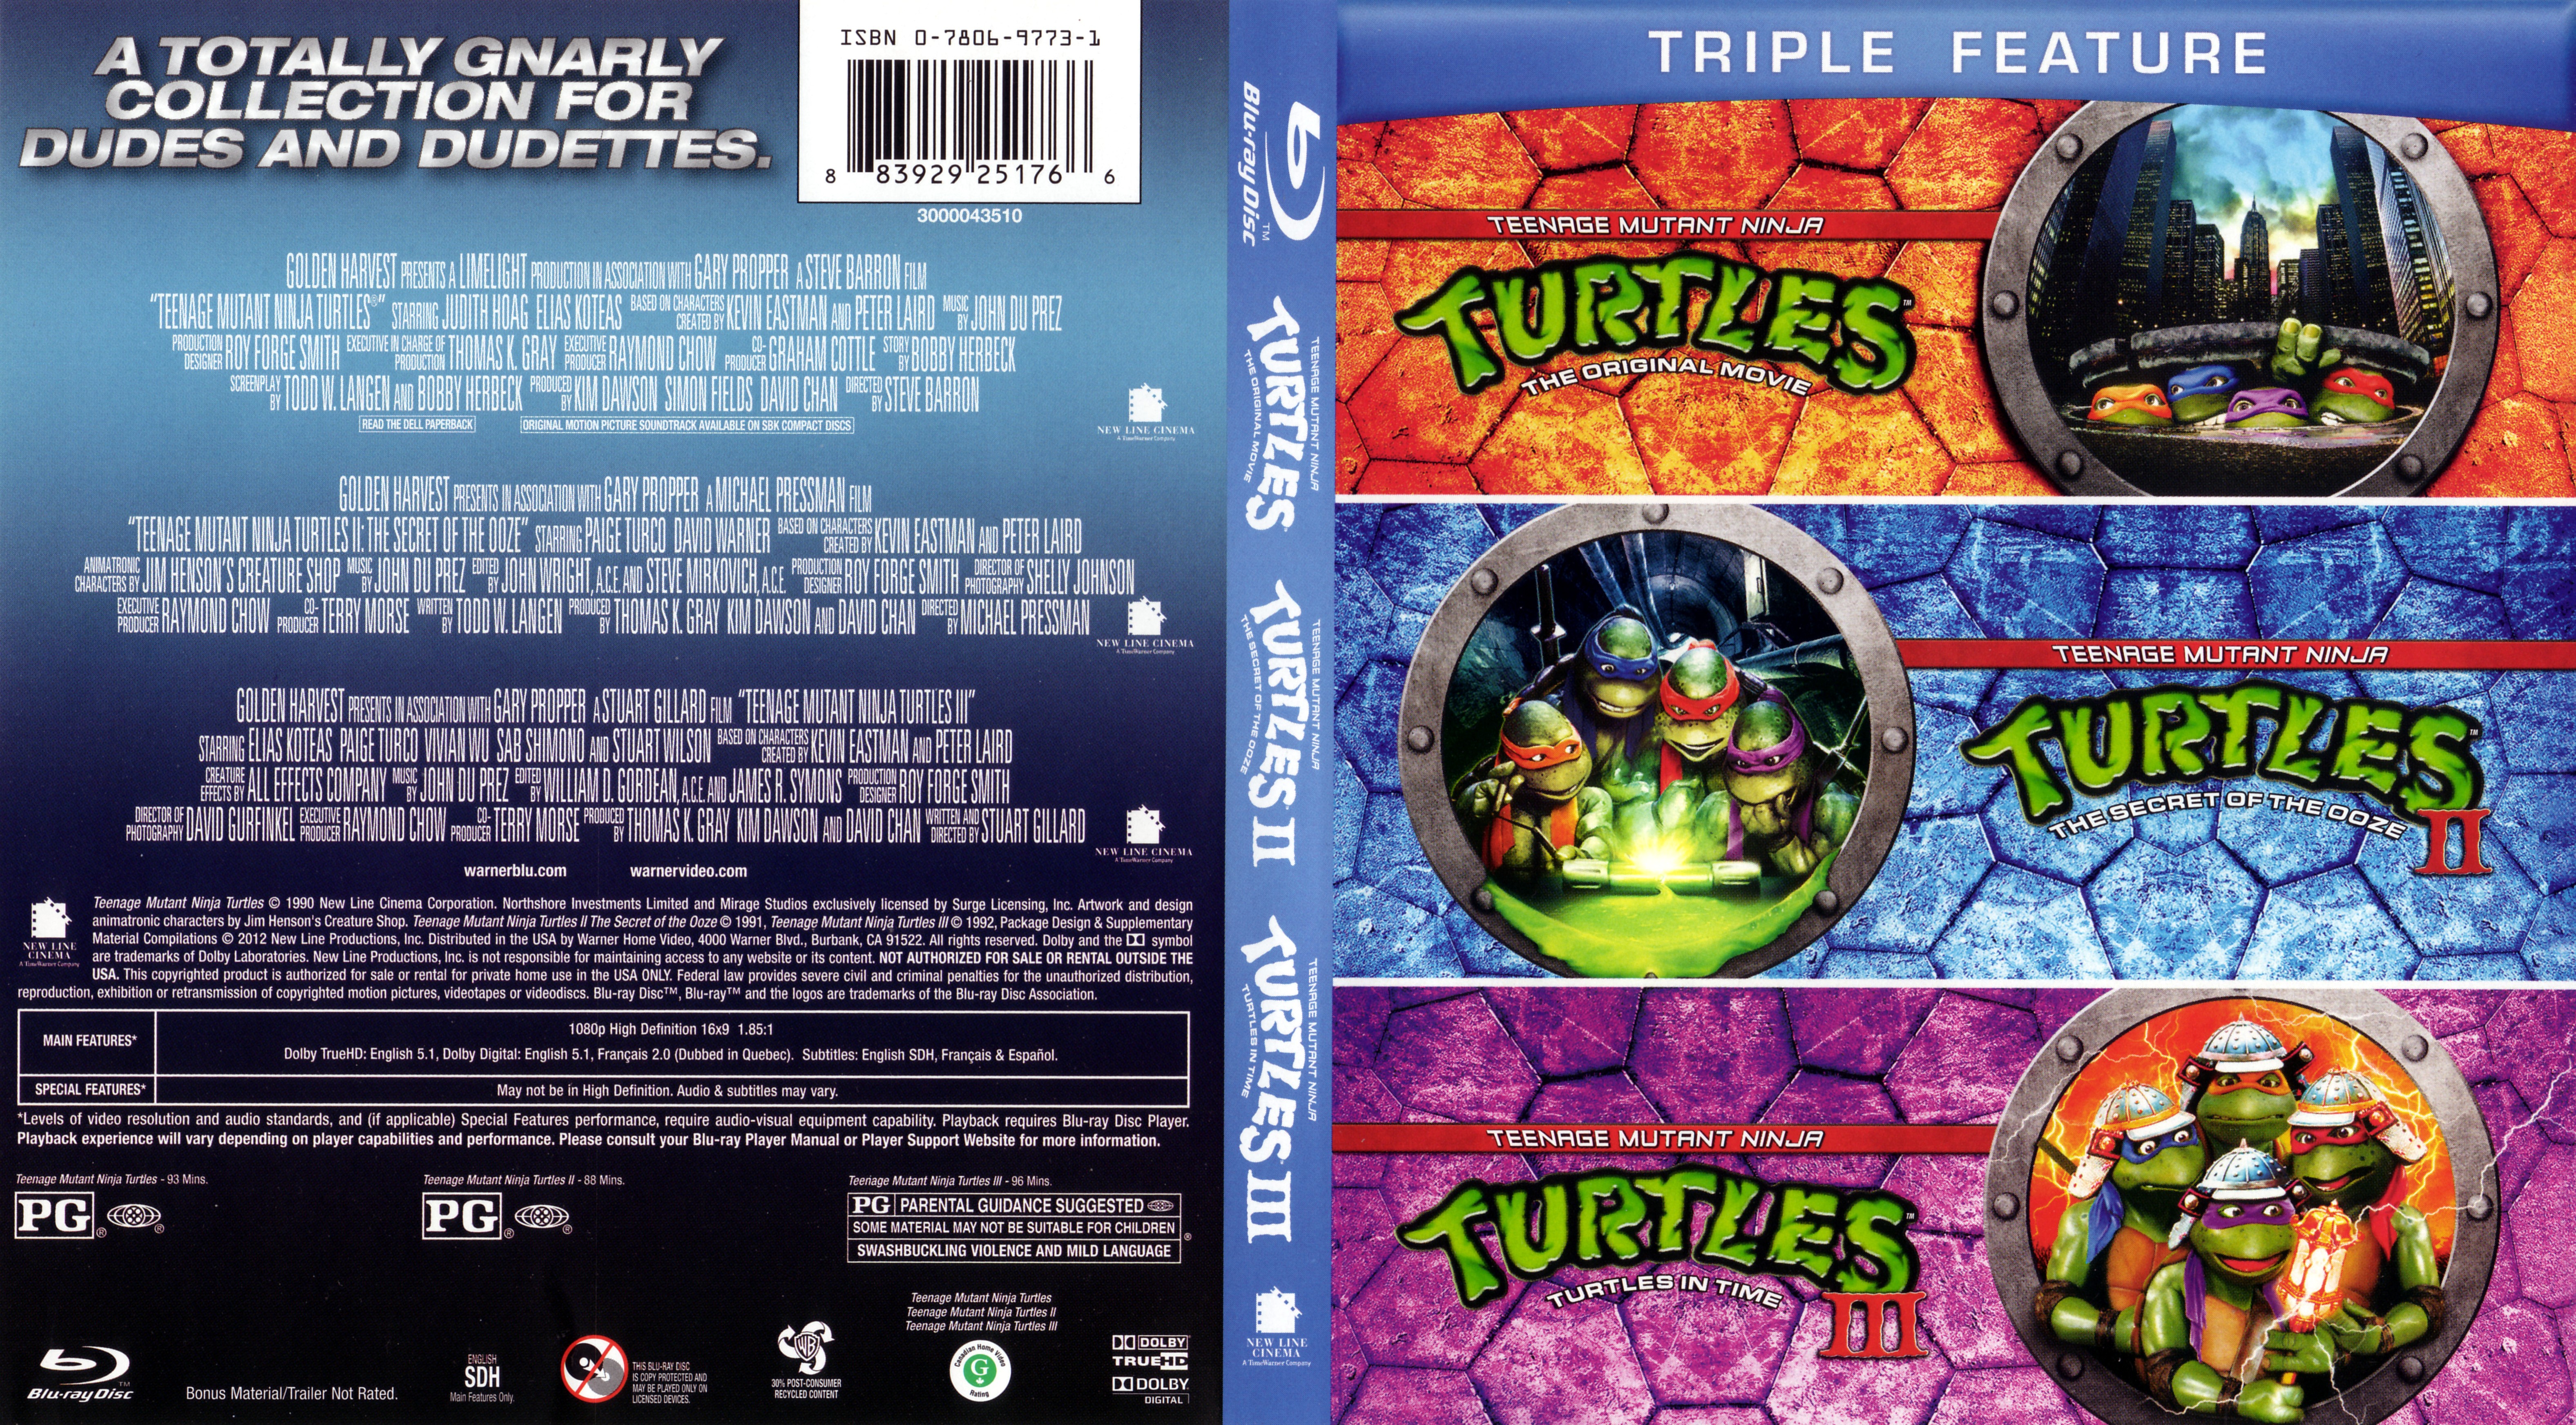 Jaquette DVD Les tortues ninjas trilogie COFFRET Zone 1 (BLU-RAY) v2